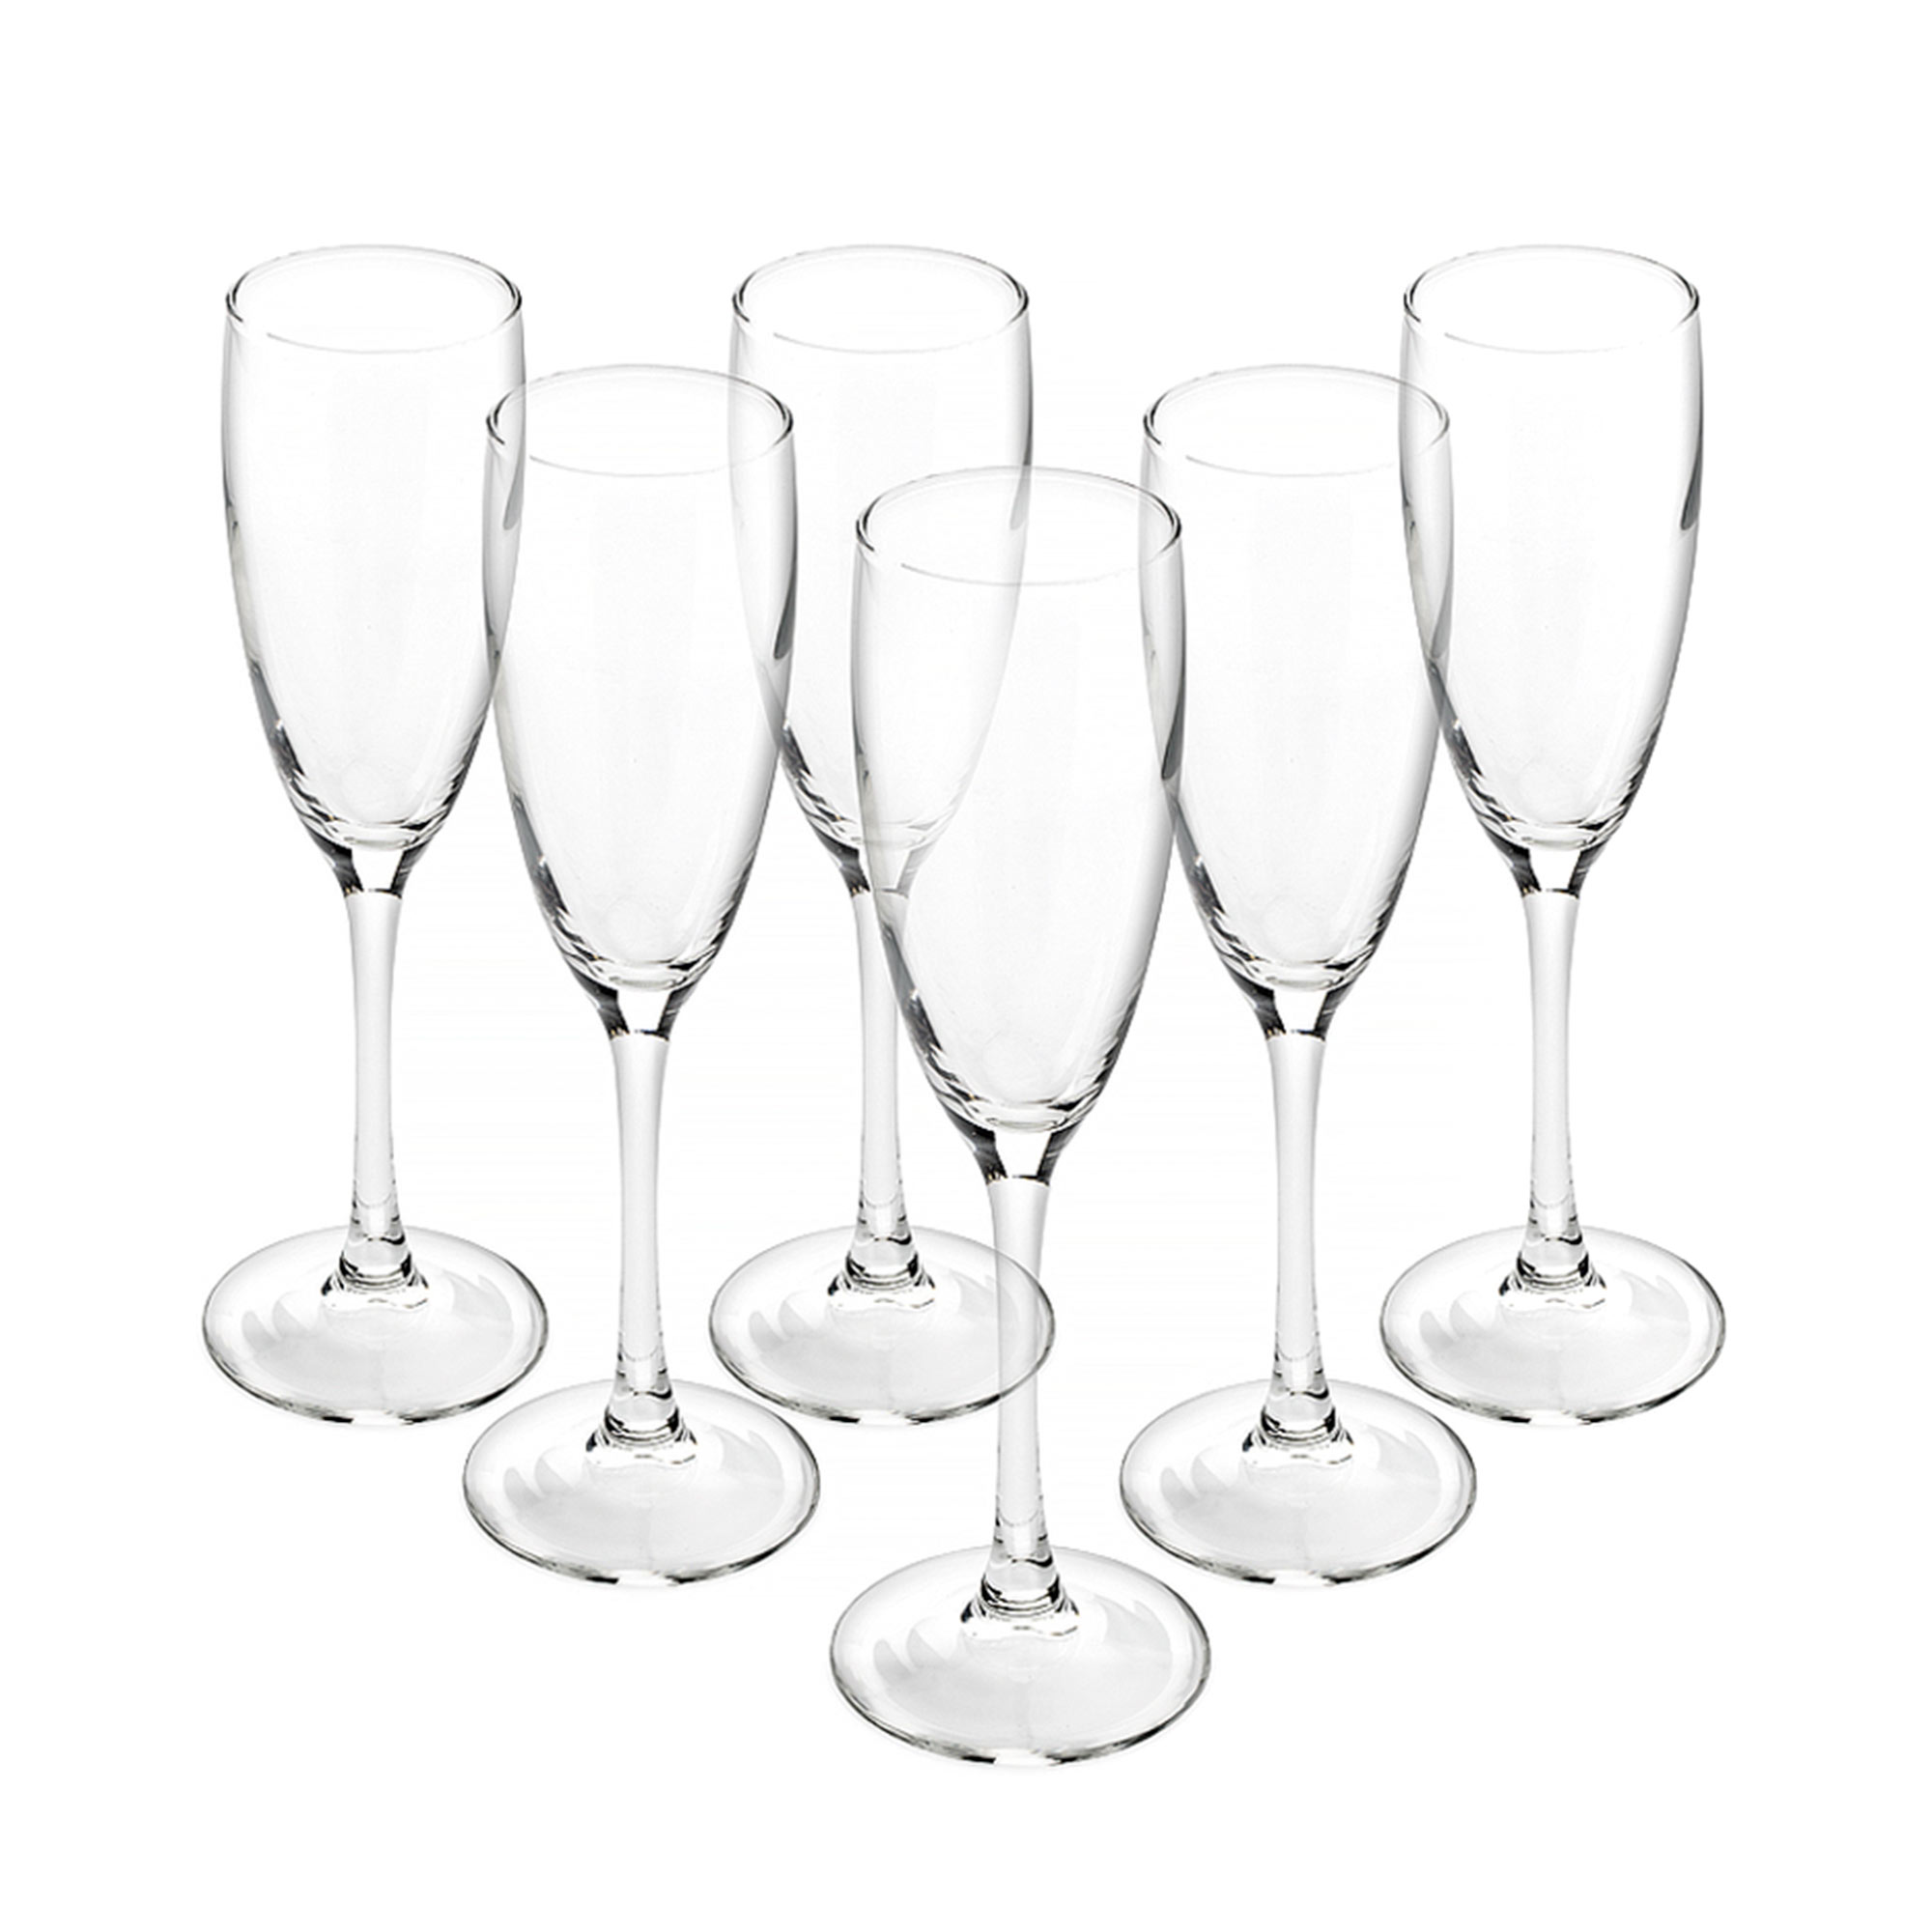 Набор бокалов для шампанского Luminarc Signature/Эталон 170 мл 6 шт набор бокалов luminarc сигнатюр эталон для шампанского 6шт 170мл